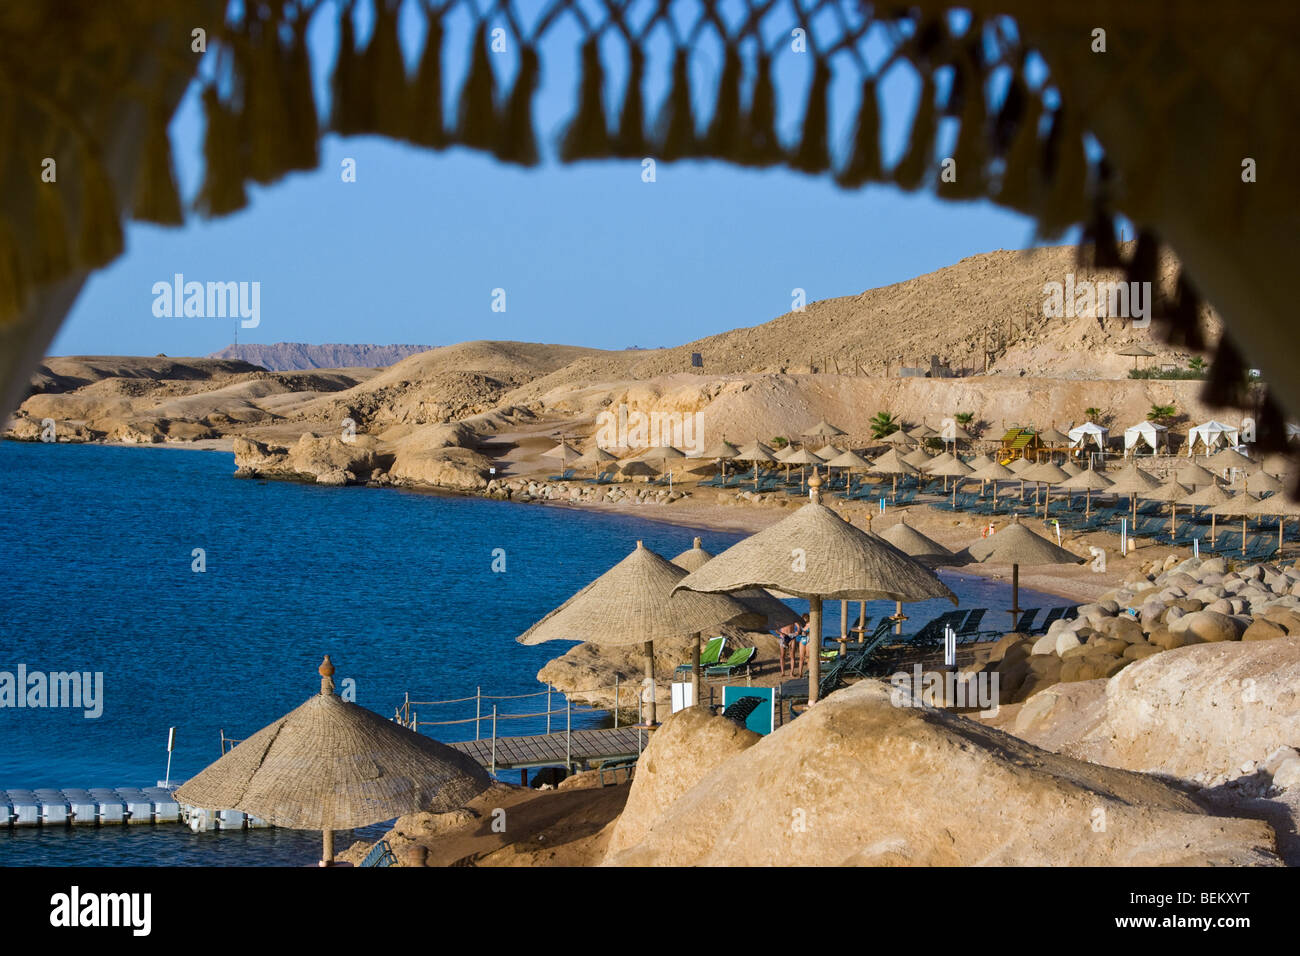 Beach at a Luxury Resort in Sharm el Sheikh Egypt Stock Photo